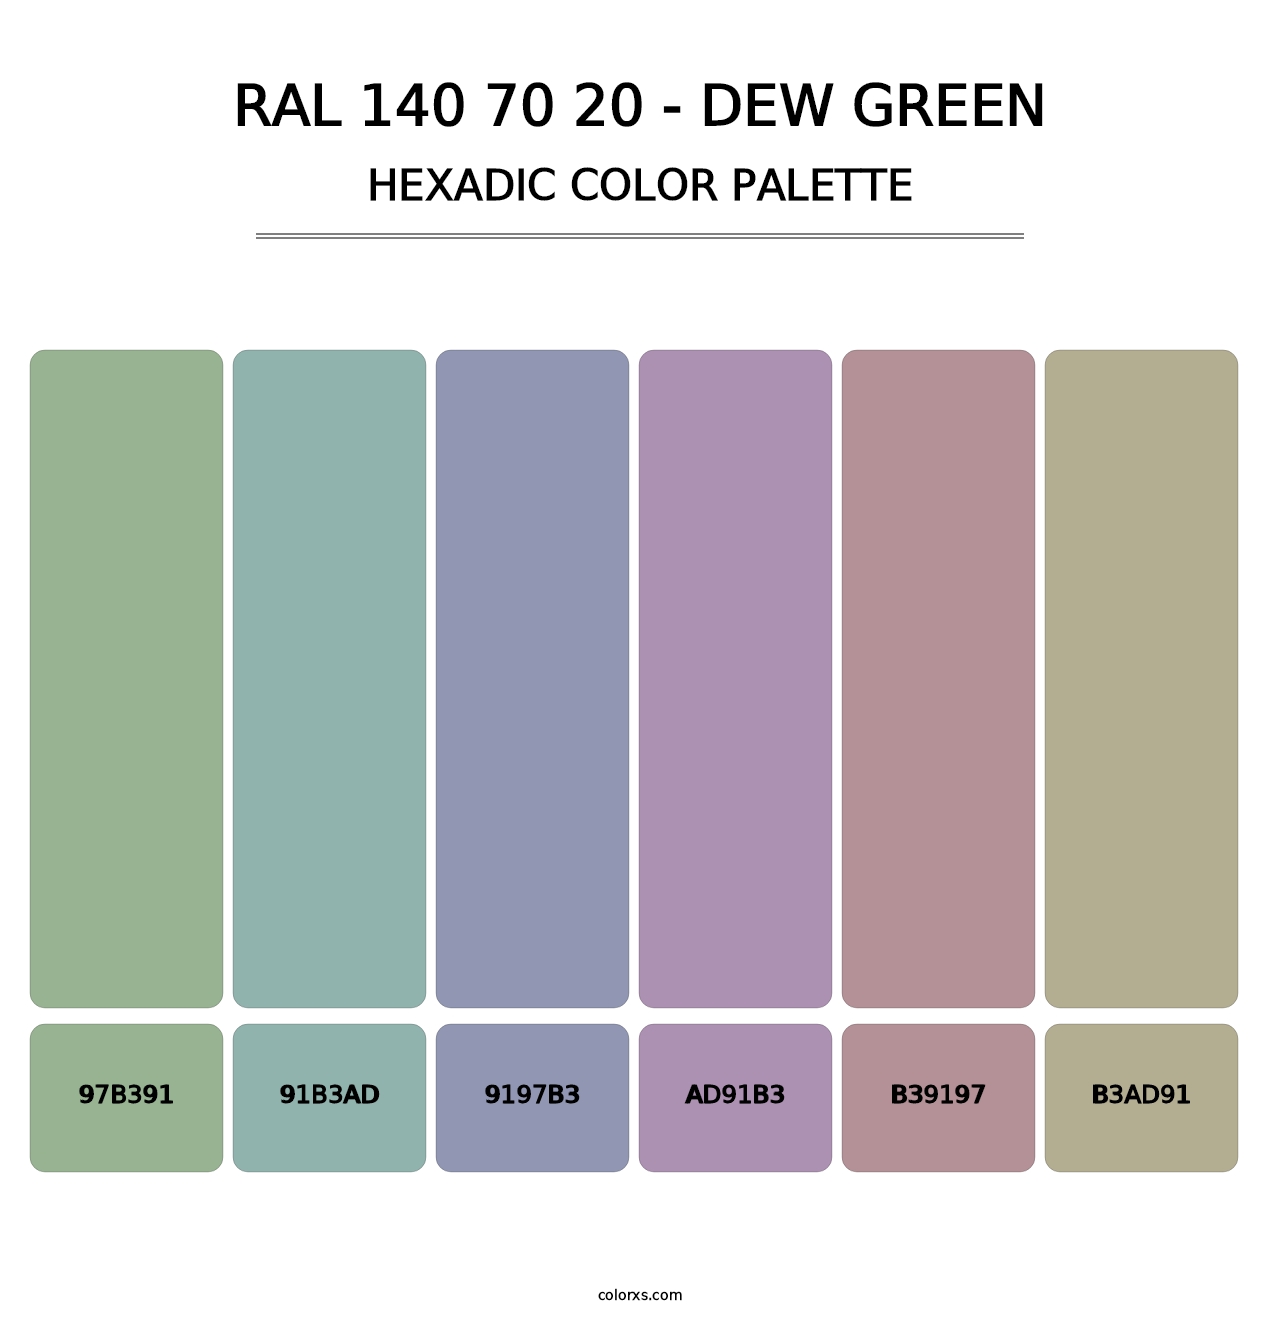 RAL 140 70 20 - Dew Green - Hexadic Color Palette